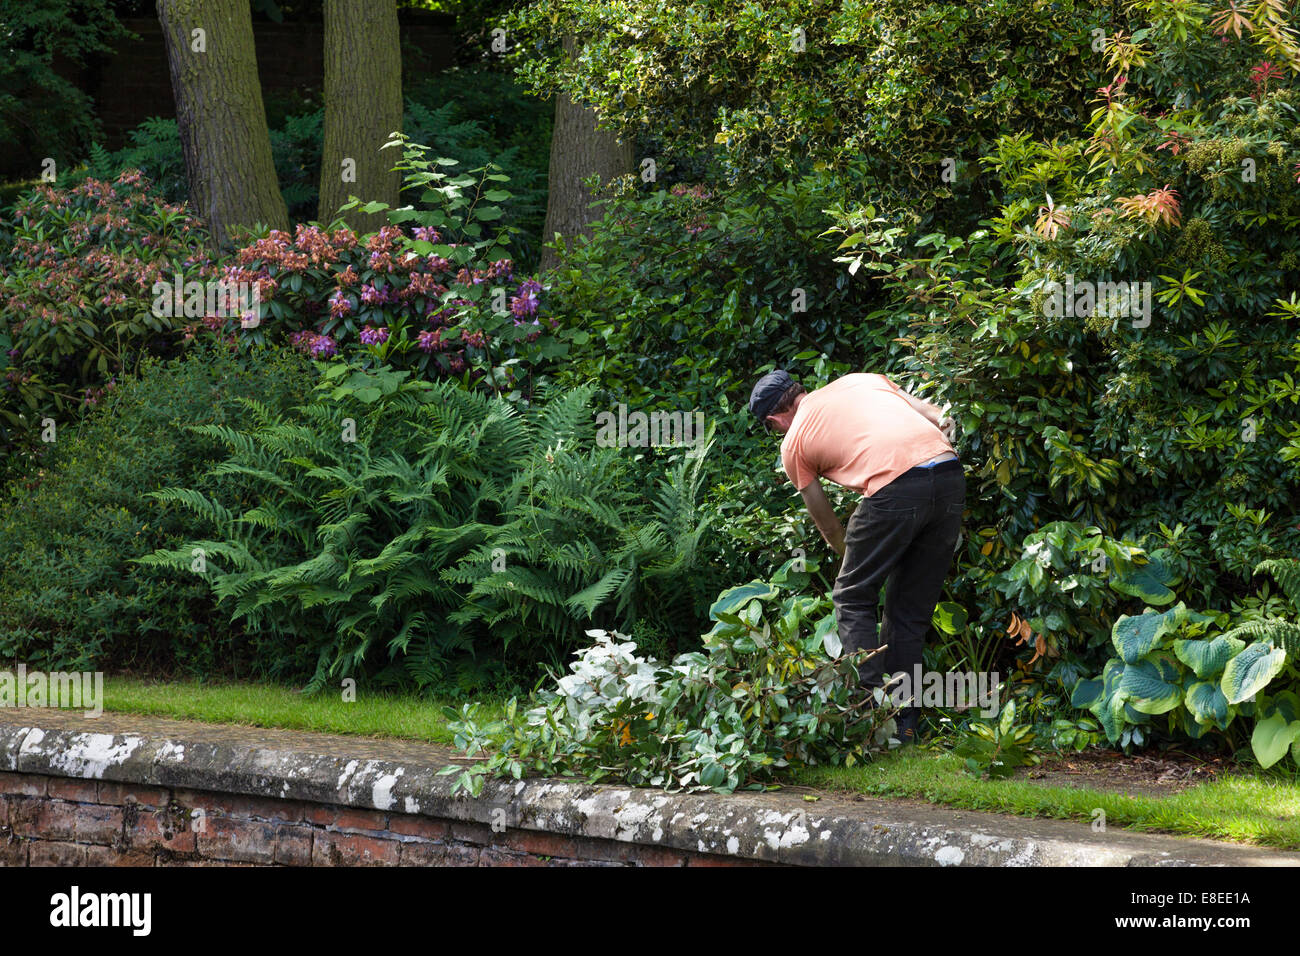 Man gardening. Gardener cutting back or pruning plants and bushes, England, UK Stock Photo